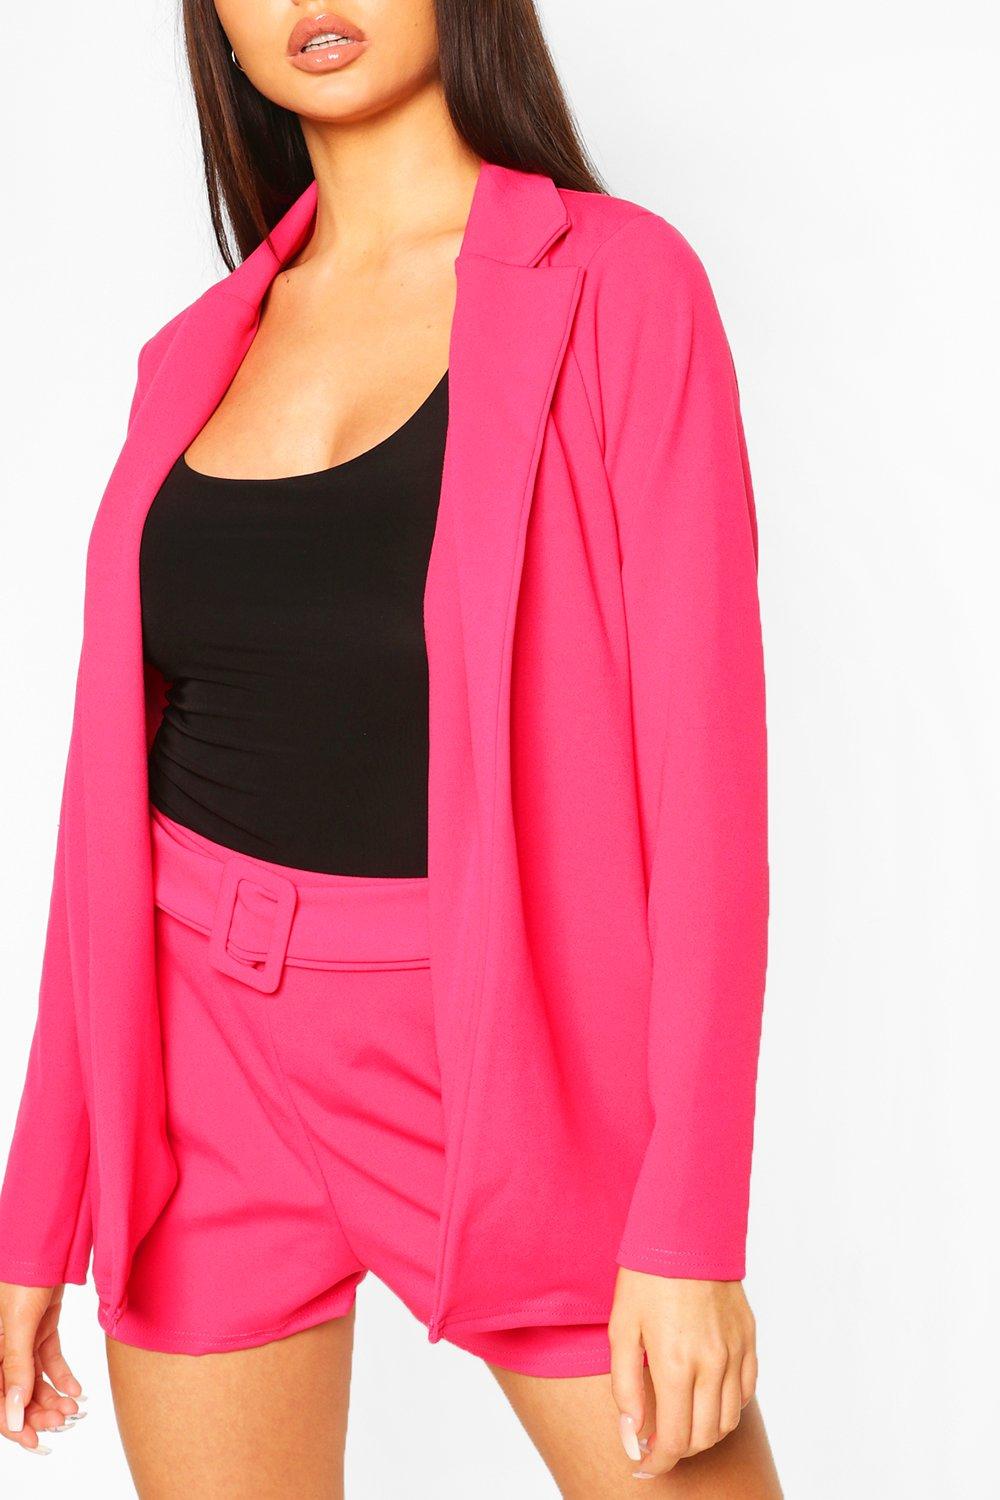 boohoo Women's Blazer And Self Fabric Belt Short Suit Set|Size: 10|hot pink